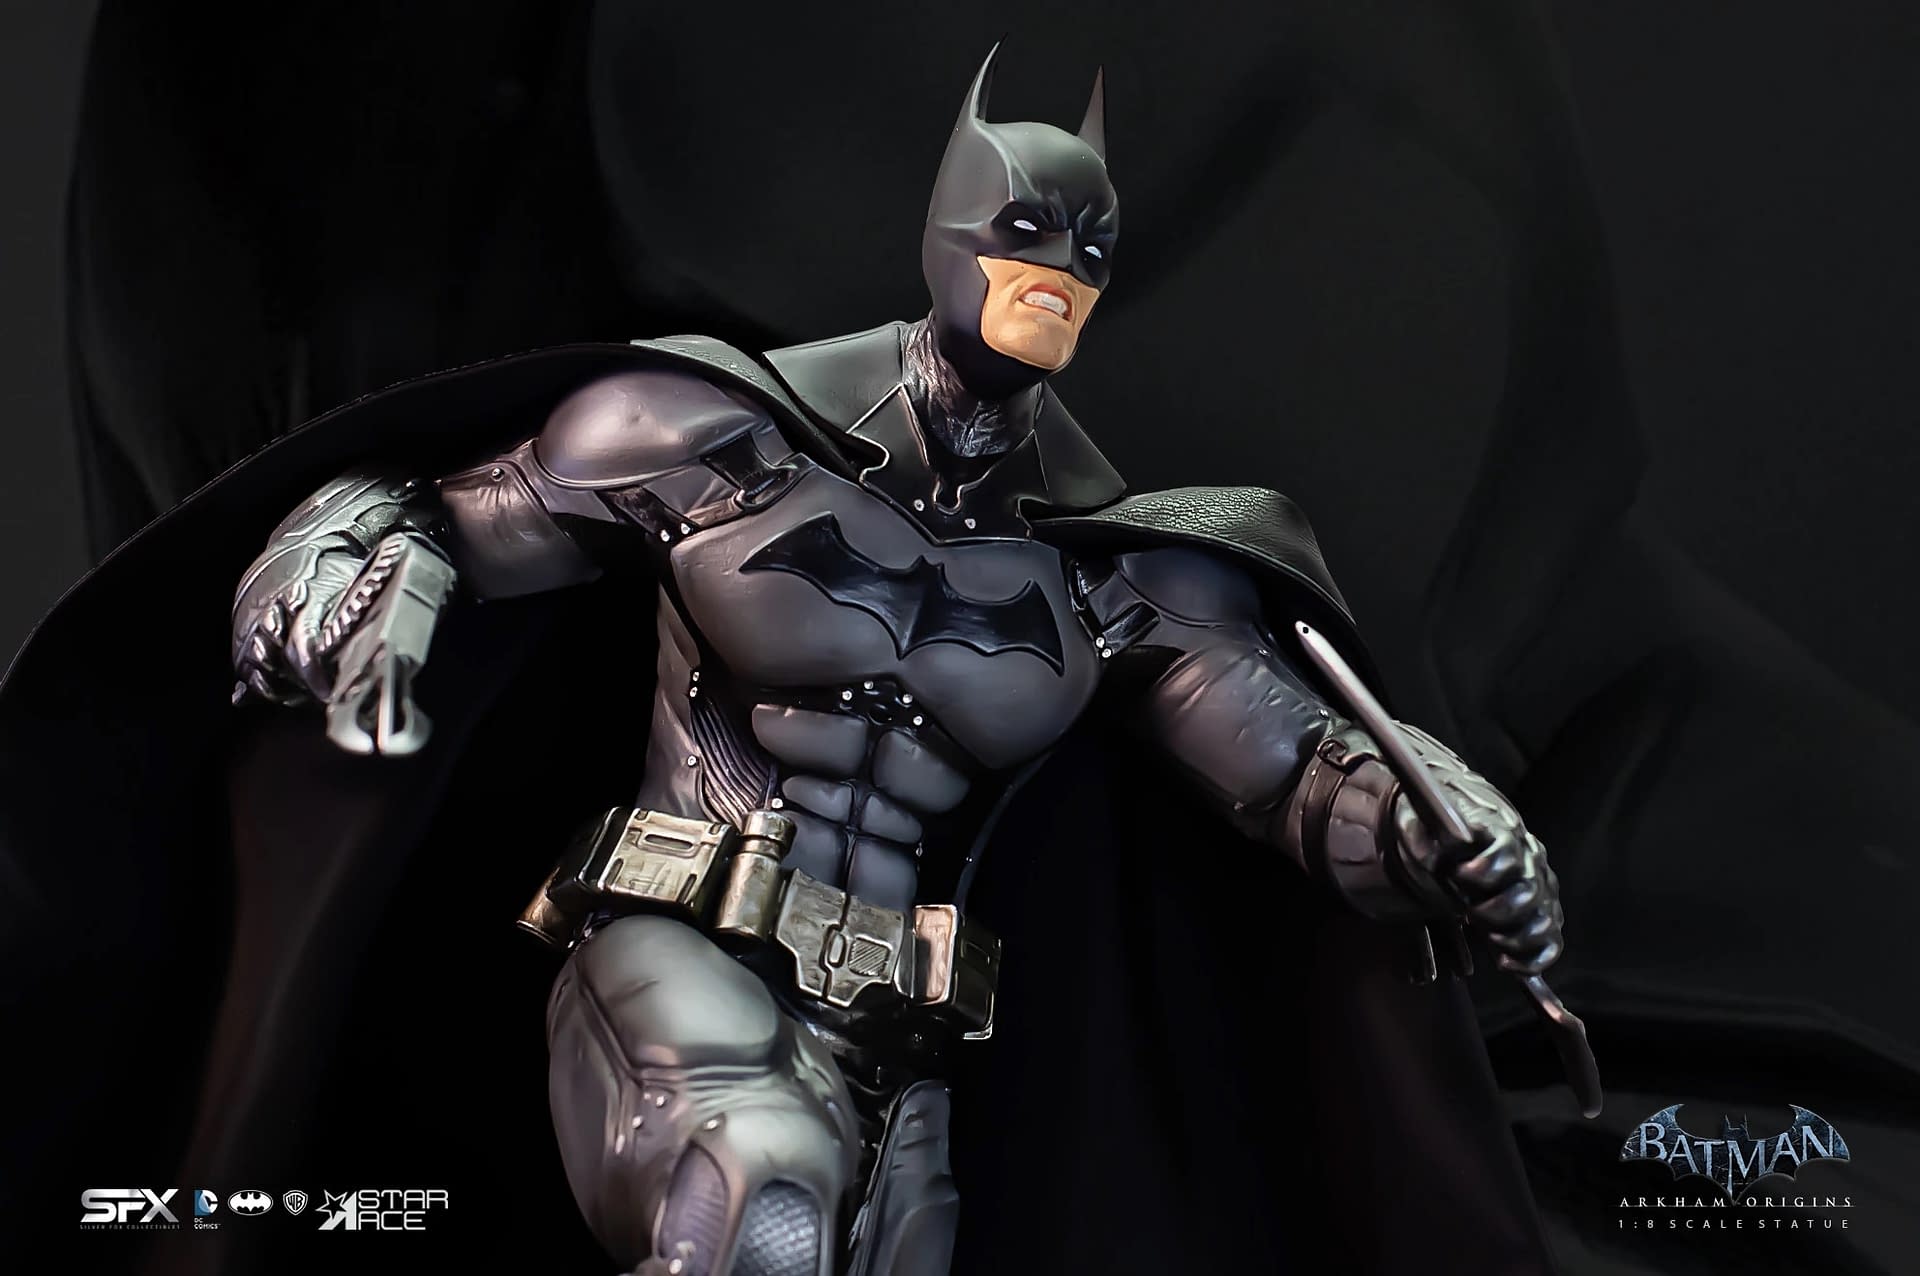 Batman-Arkham Origins Excl Statue - sfxcollectibles